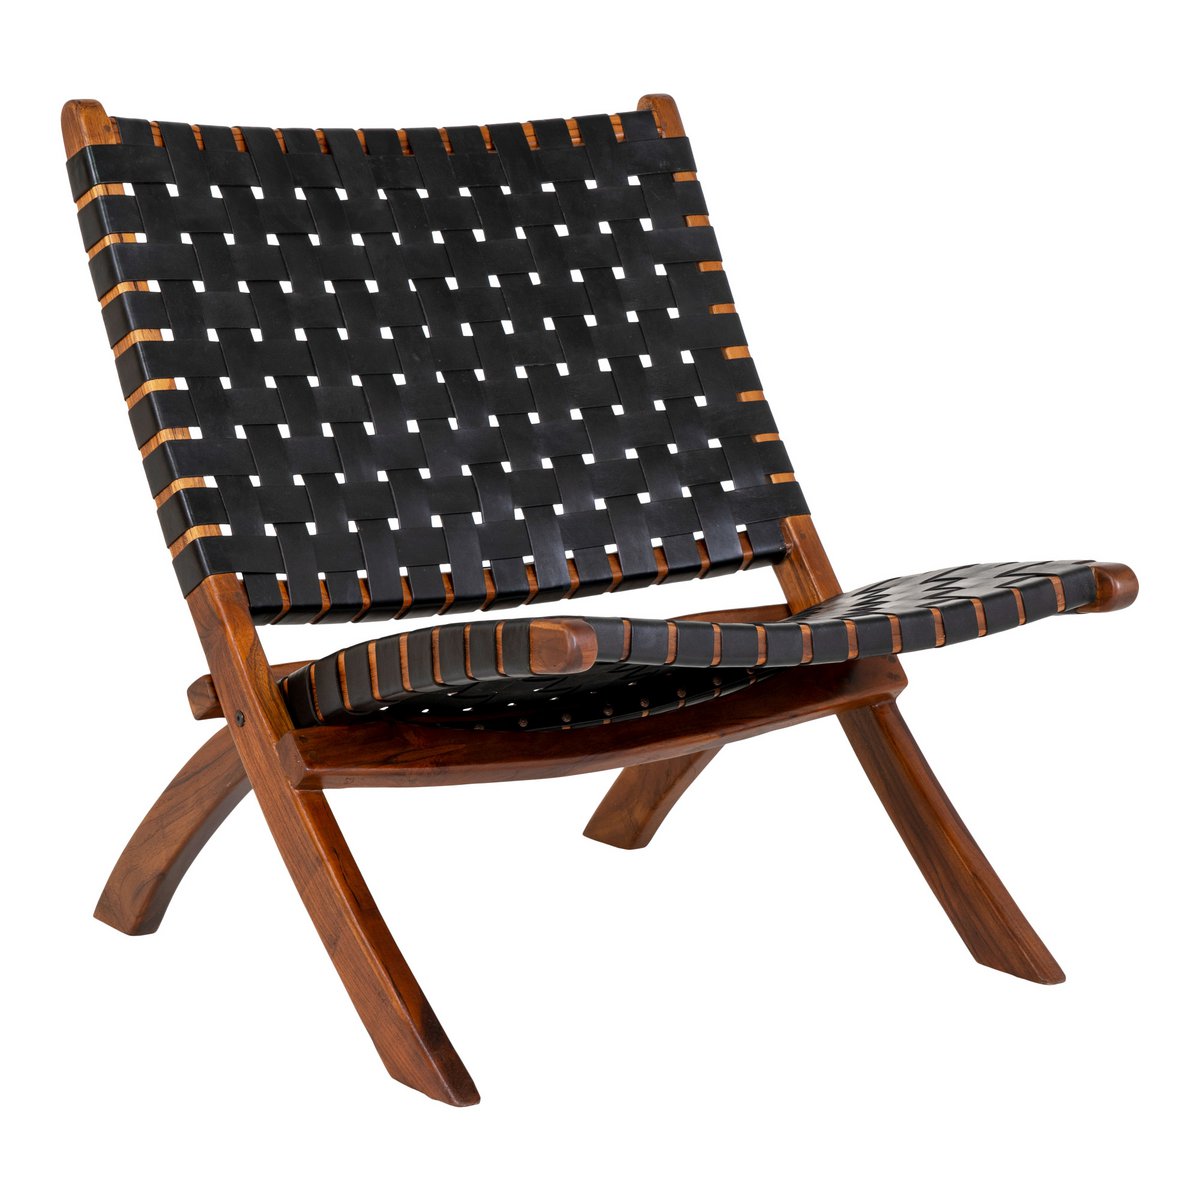 Perugia folding chair leather black